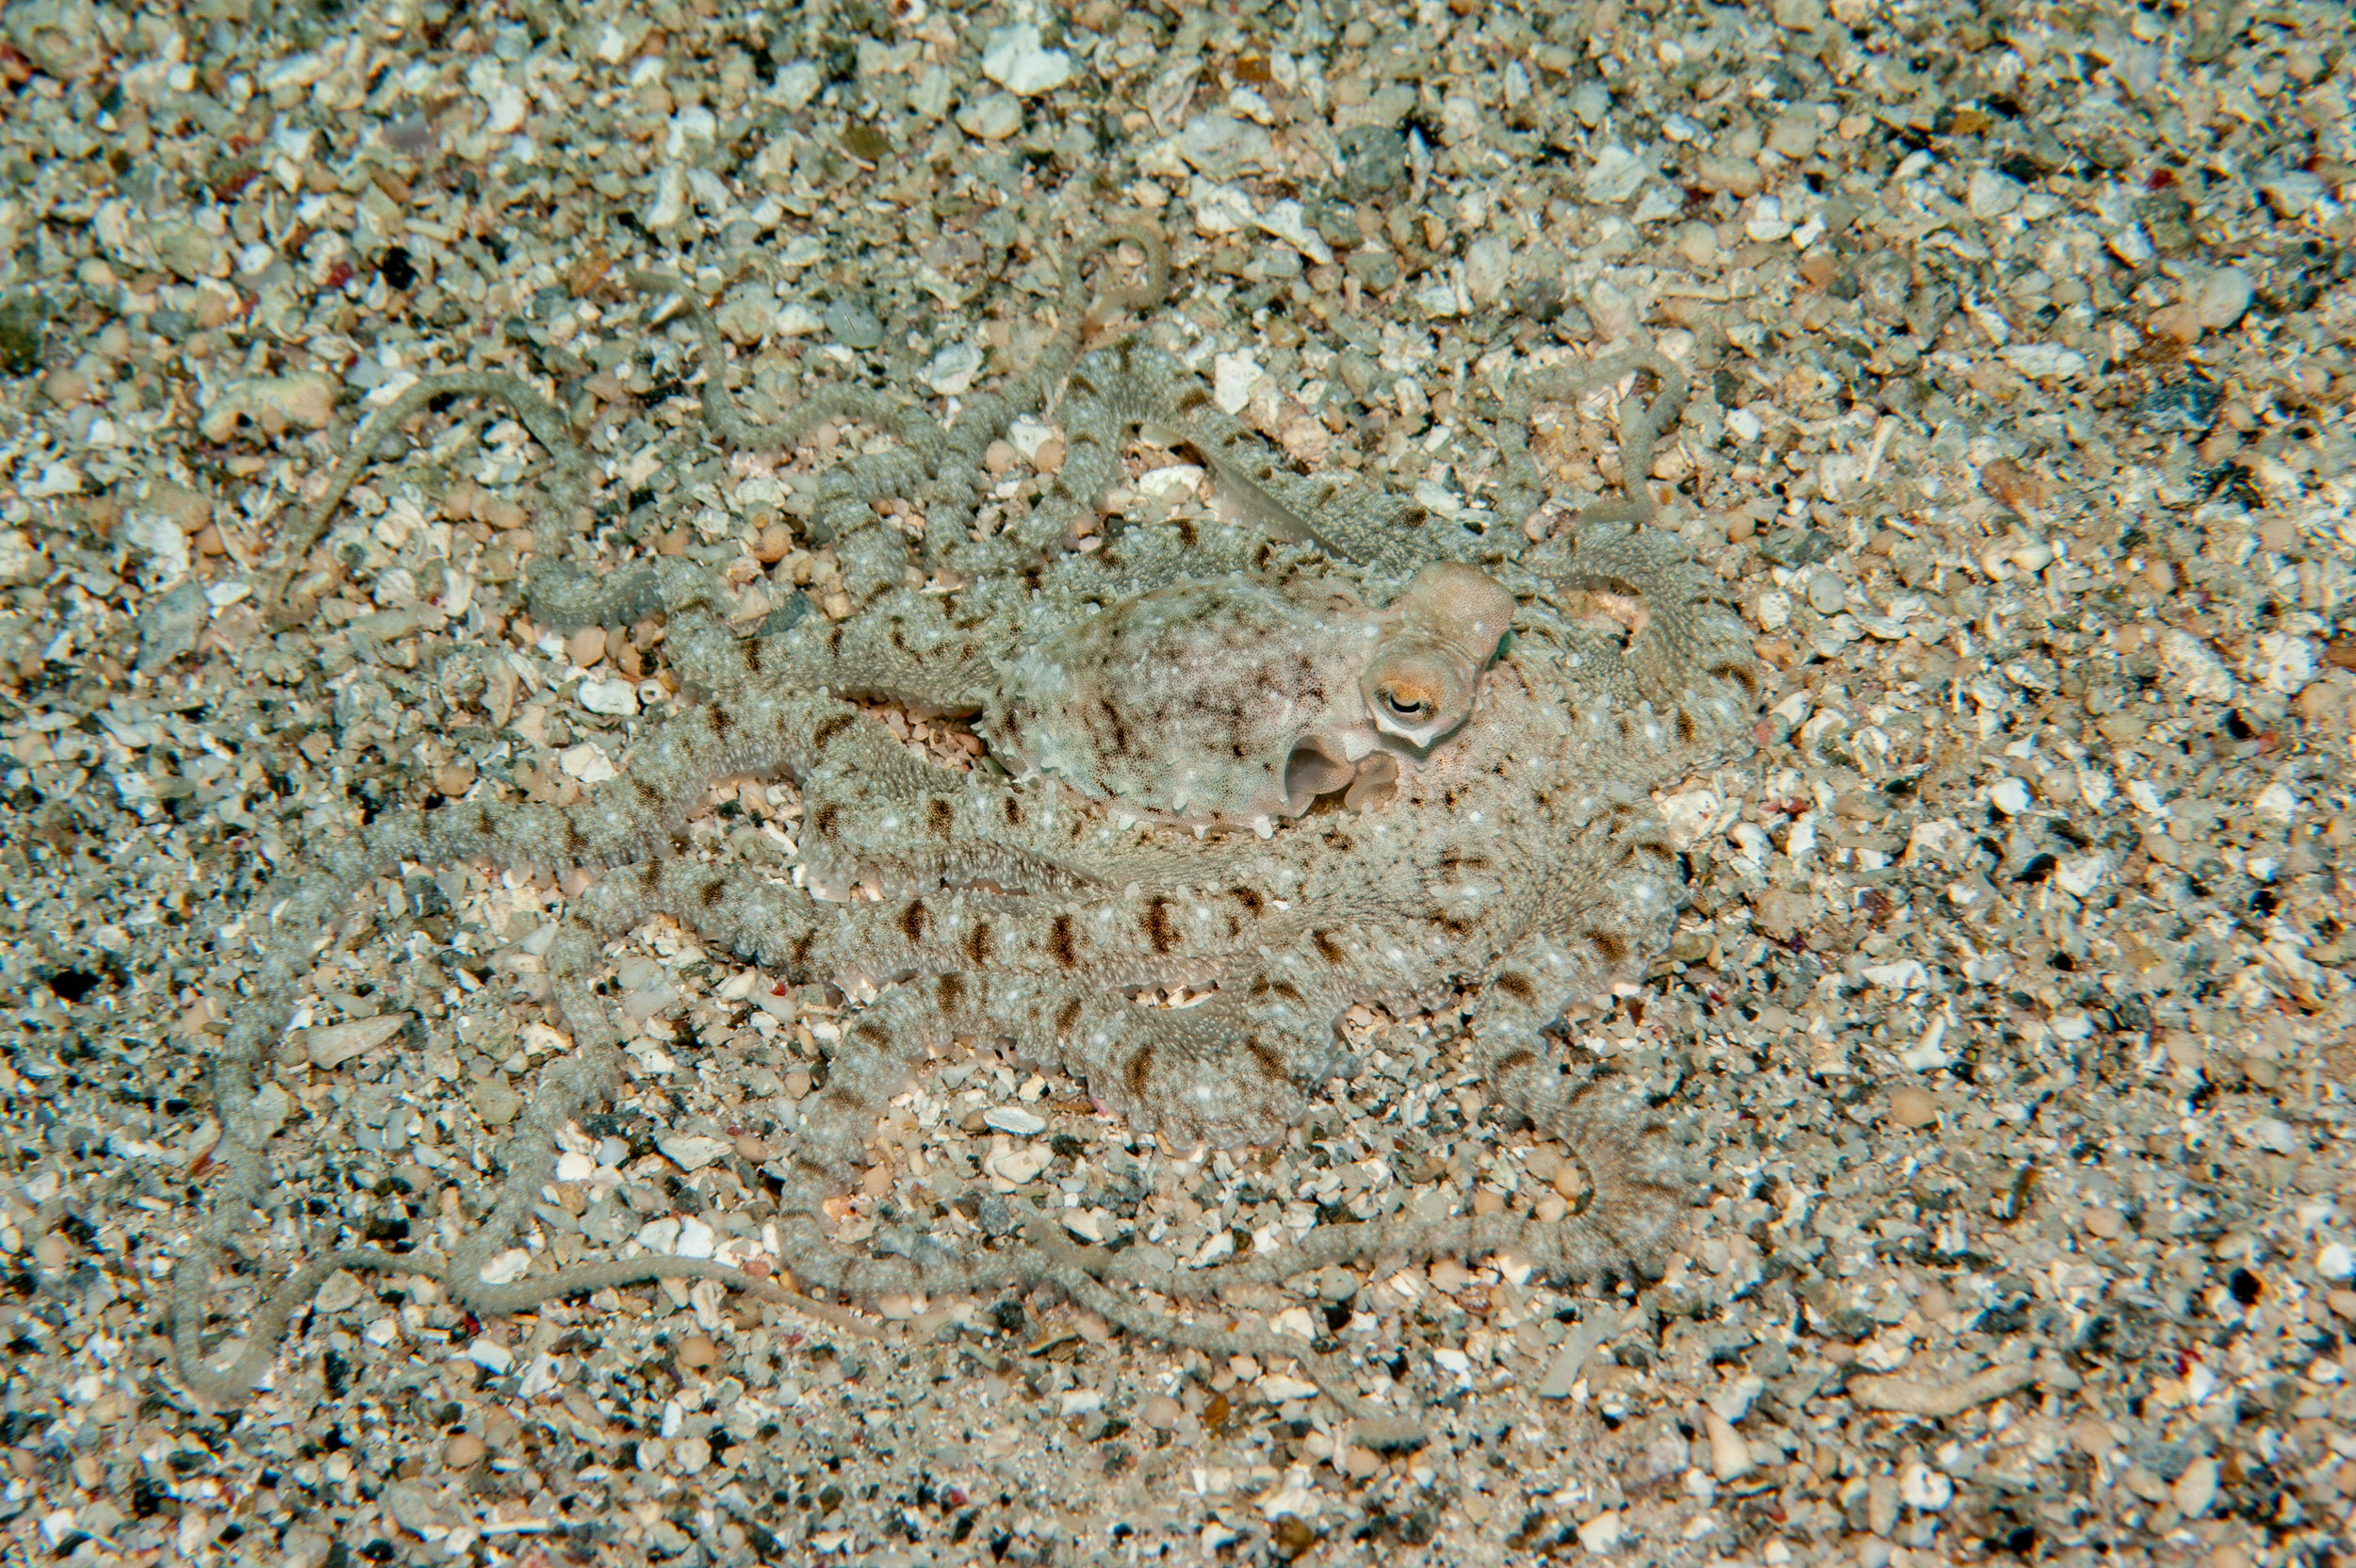 Mimic octopus - Thauoctopus mimicus, Widu Harbour, Witu Islands